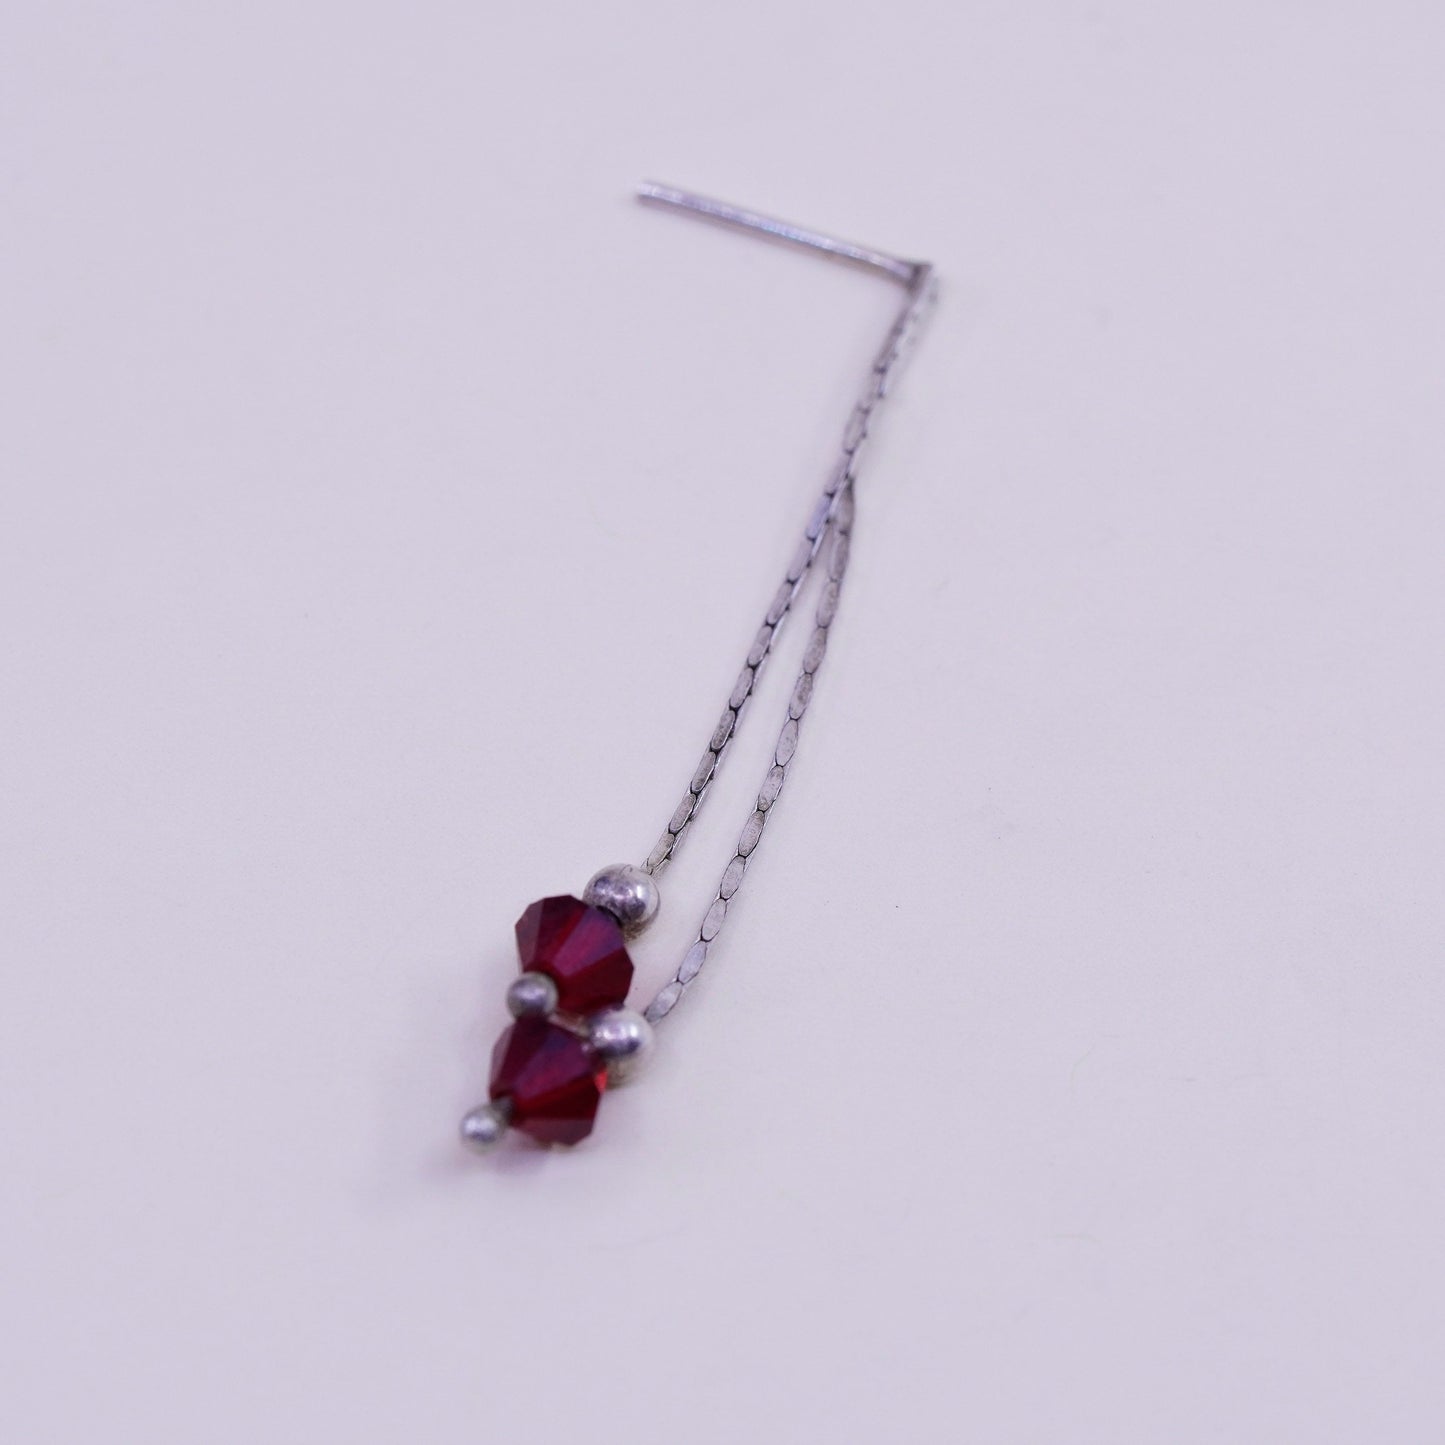 Vintage sterling silver handmade earrings, 925 fringe with ruby crystal beads